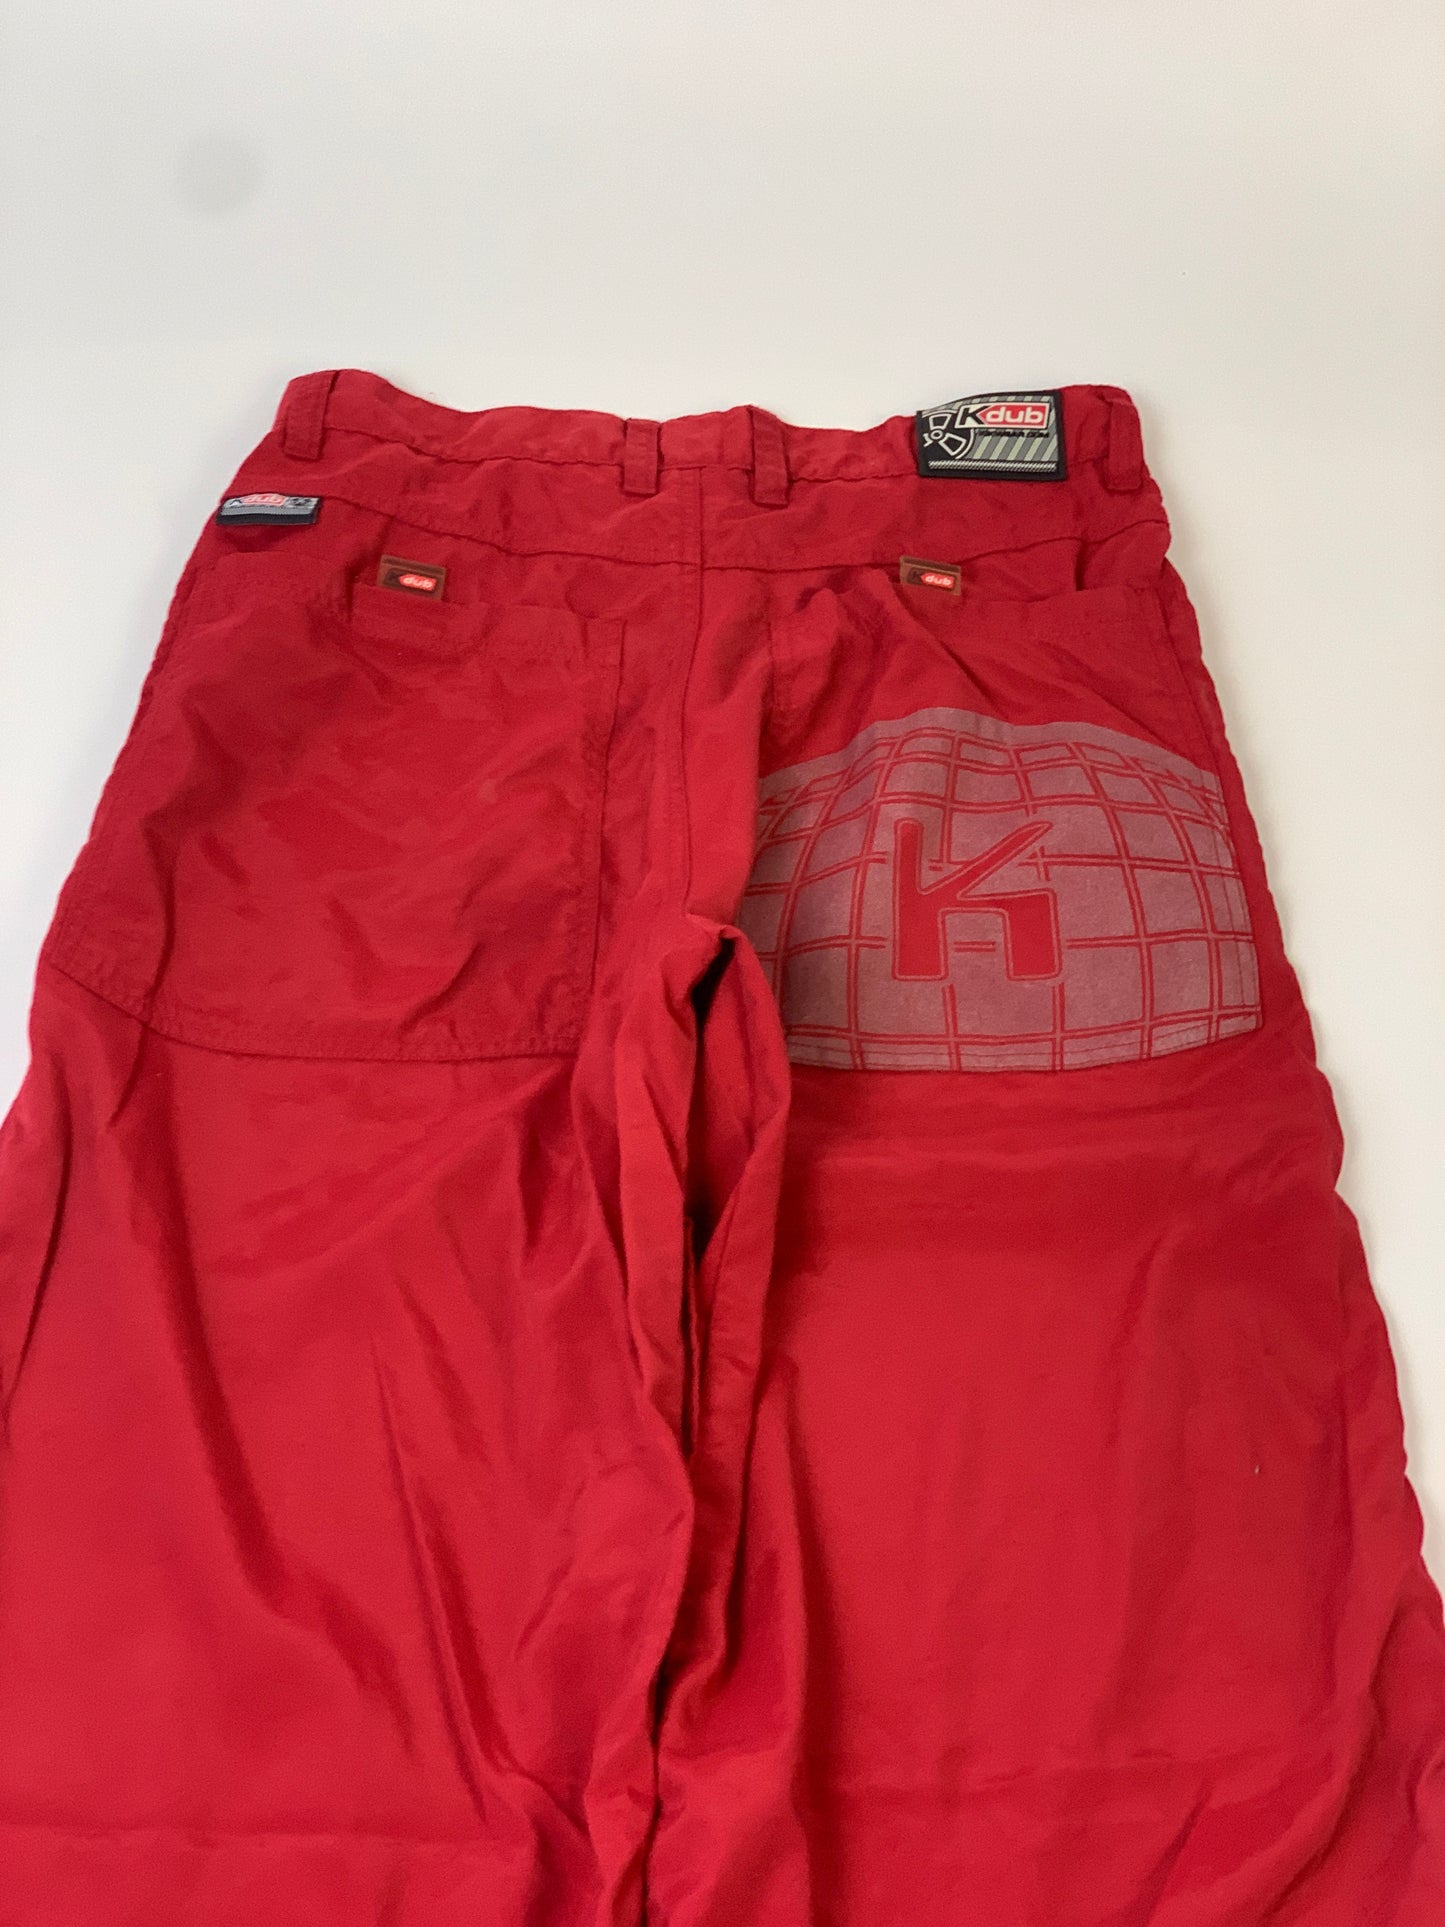 Kdub Kikwear Red Vintage Raver Baggy Flash Pants - 34